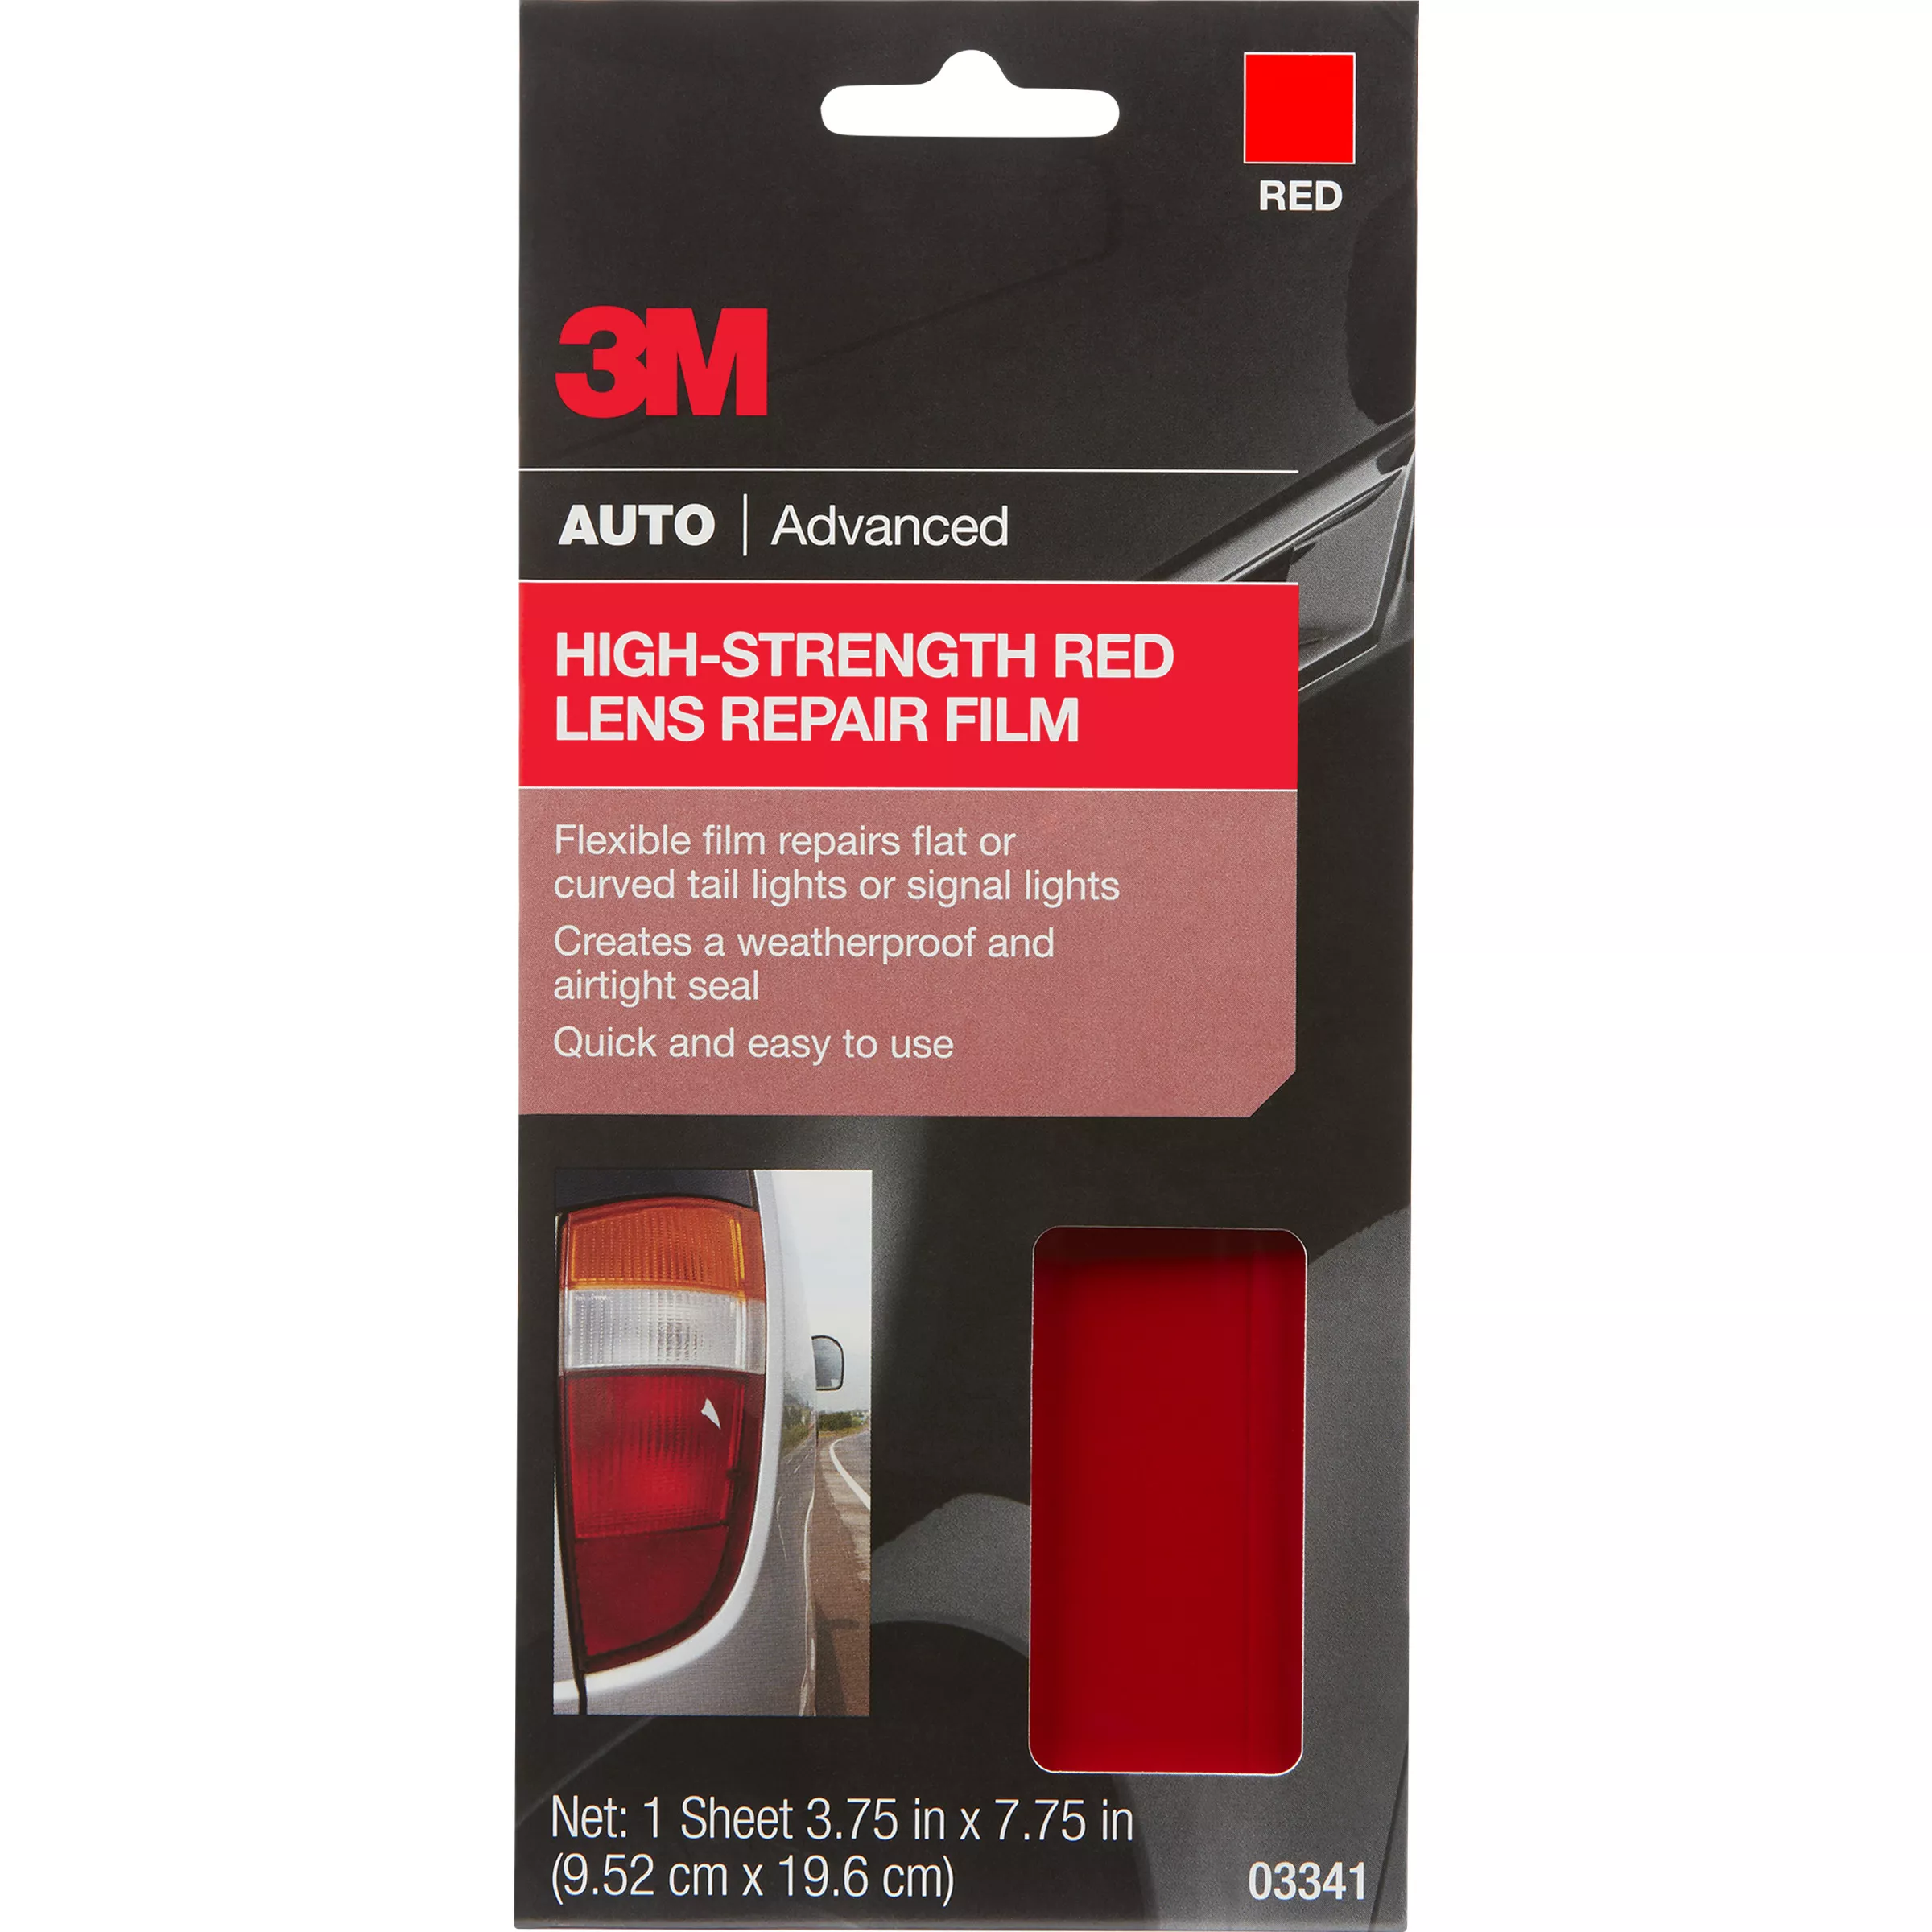 3M™ High Strength Lens Repair Film Red, 03341, 3.75 in x 7.75 in, 24 per
case